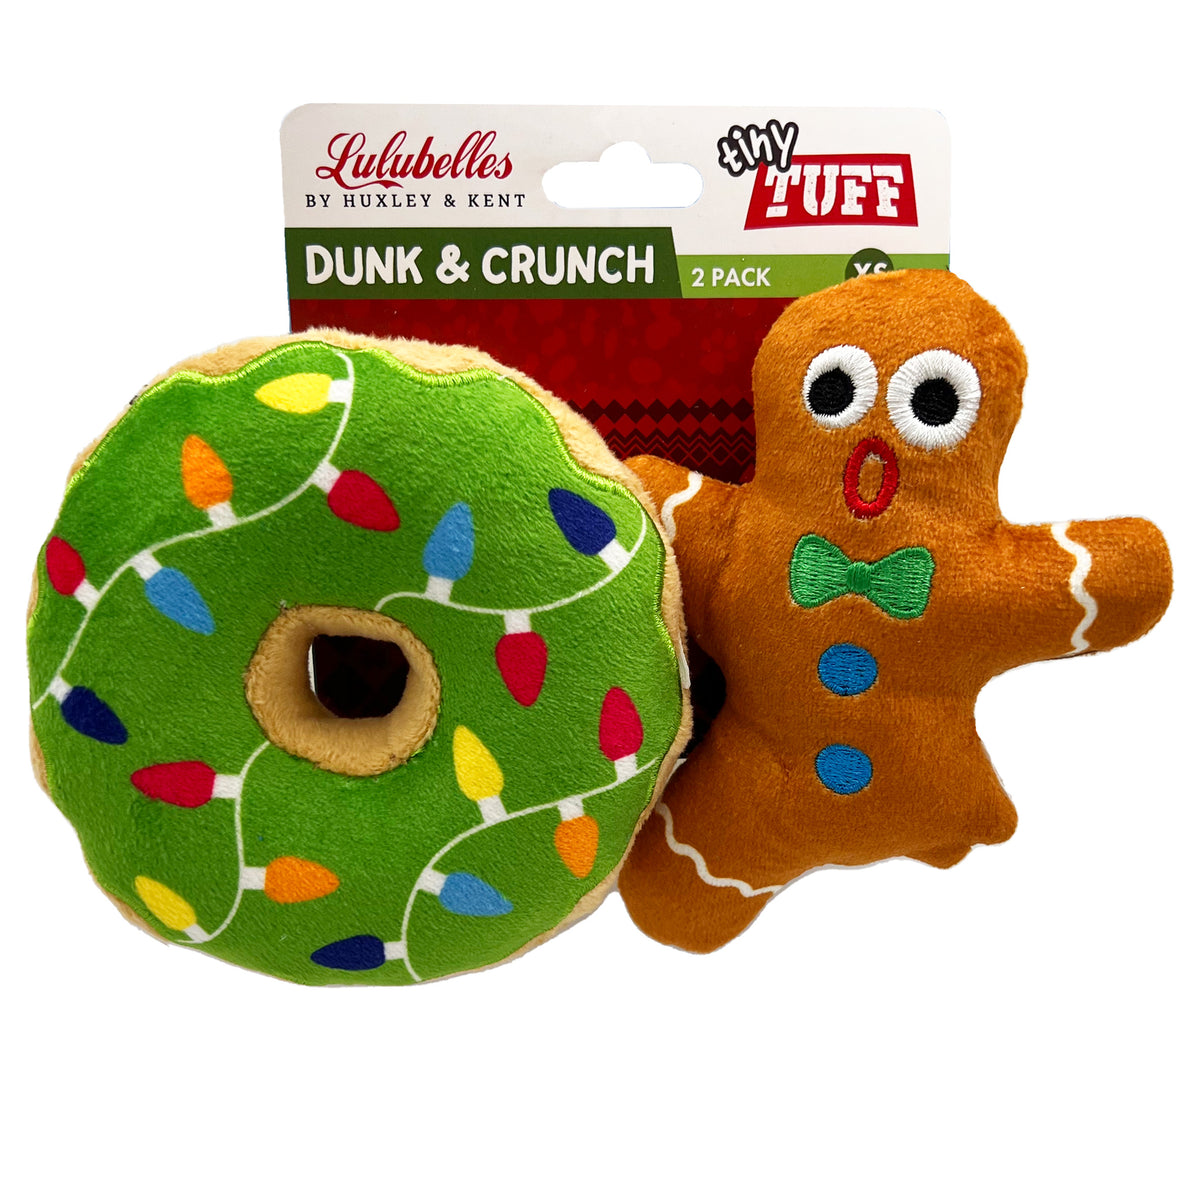 Tiny Tuff Dunk &amp; Crunch